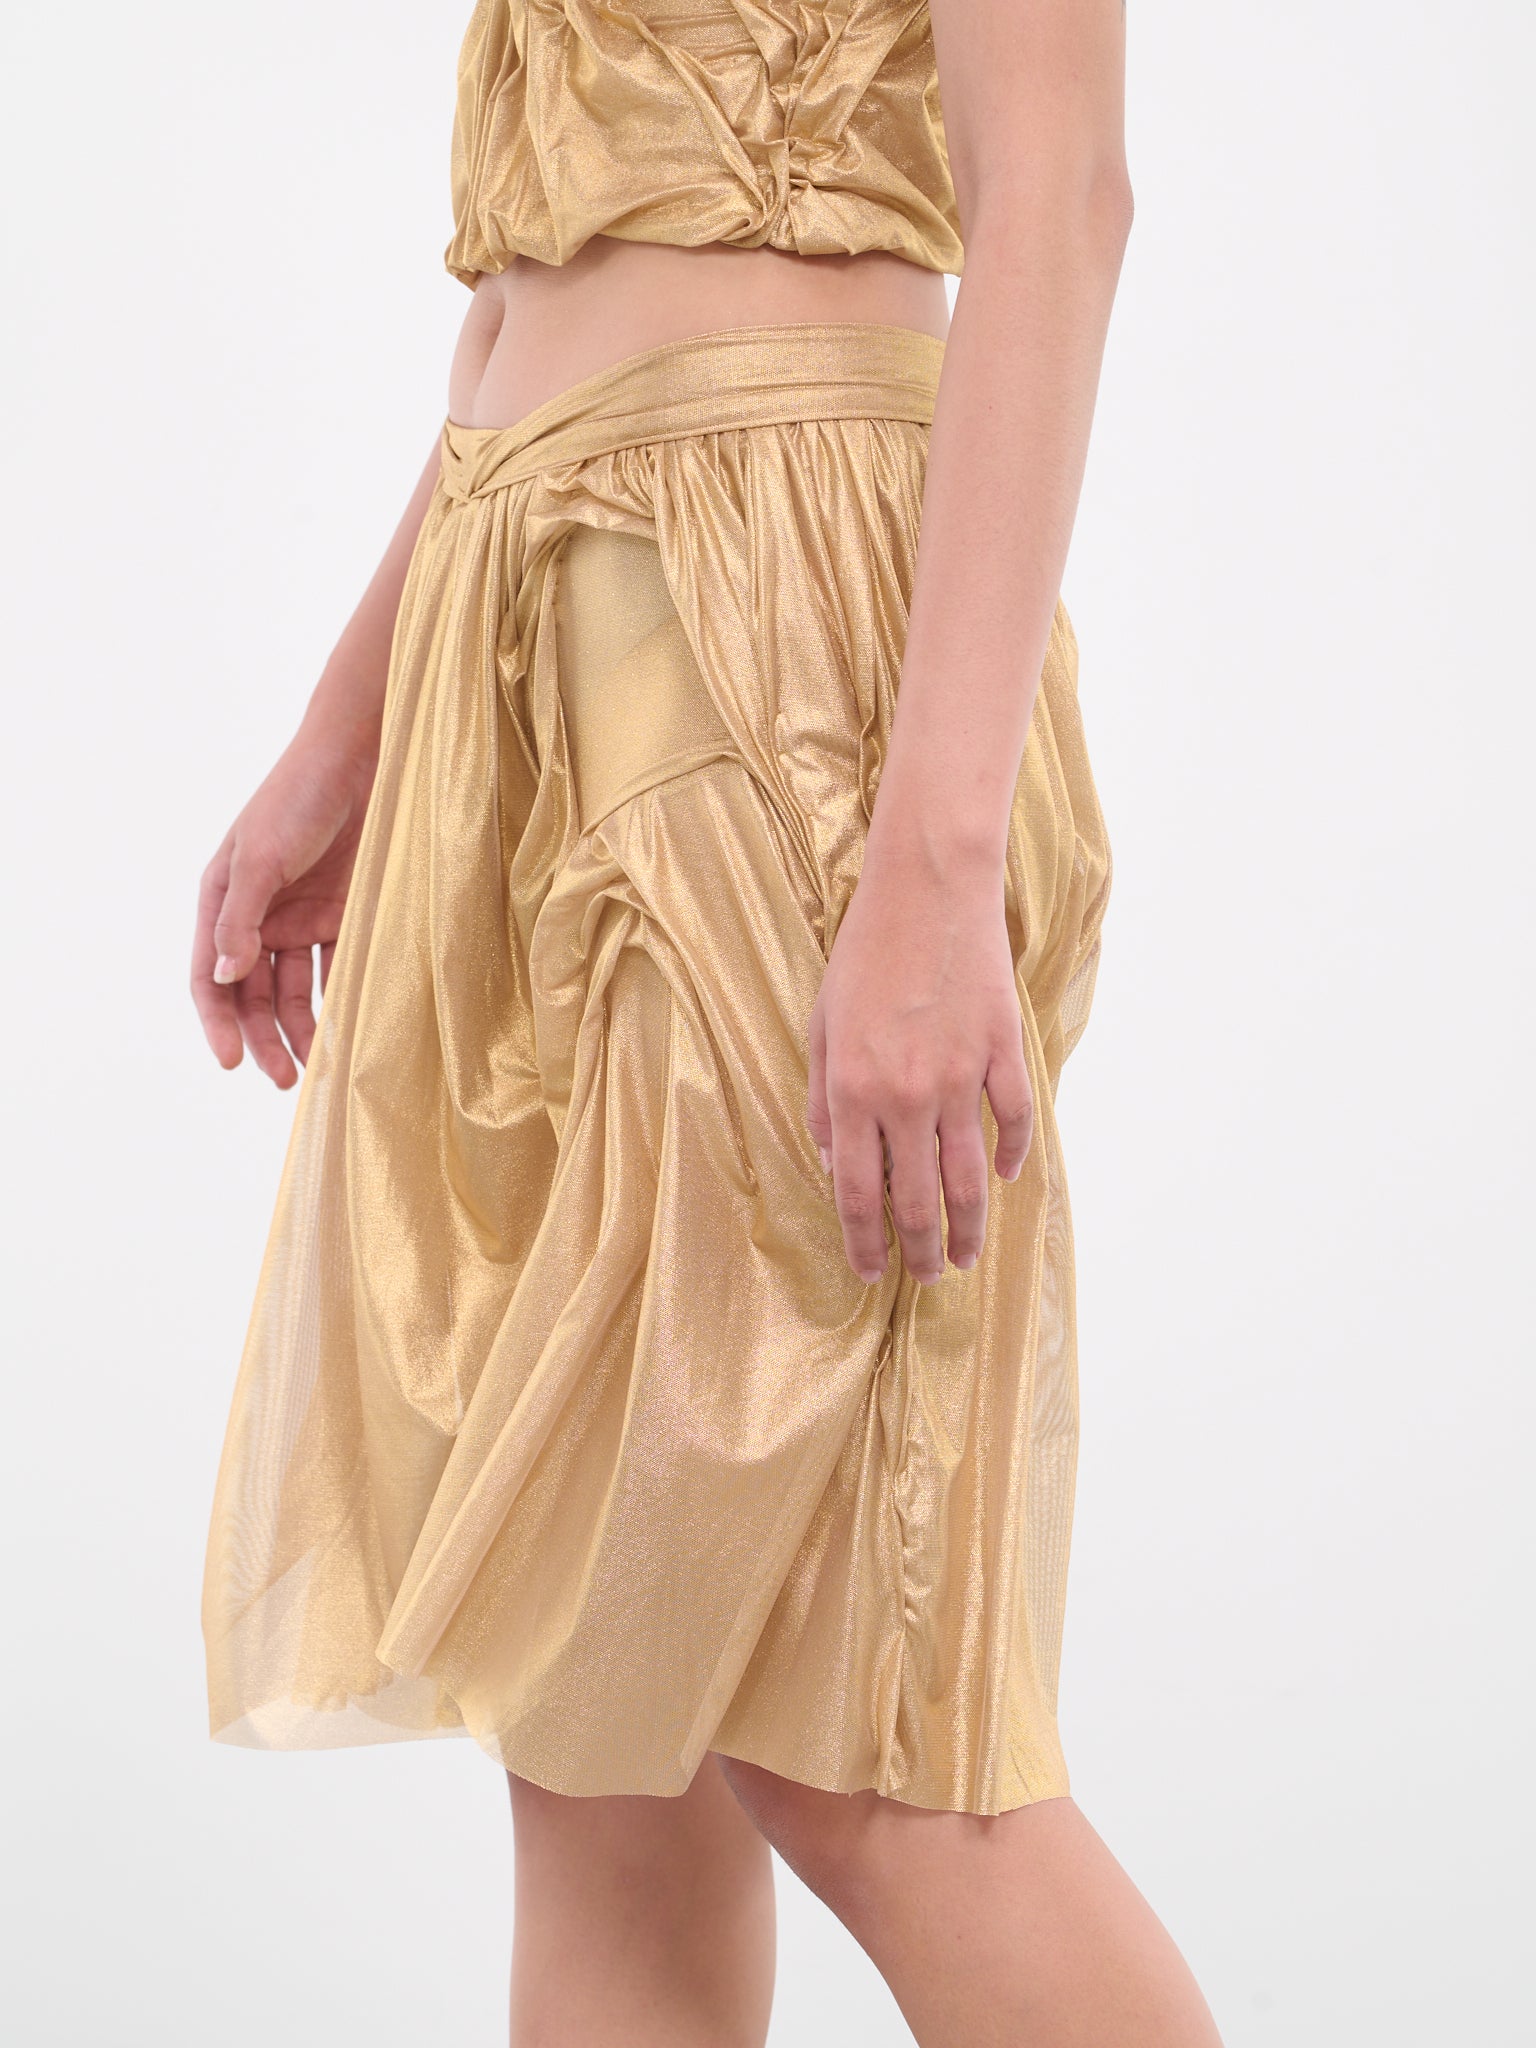 Wet Midi Skirt (WETLOOK-MIDI-GOLD)